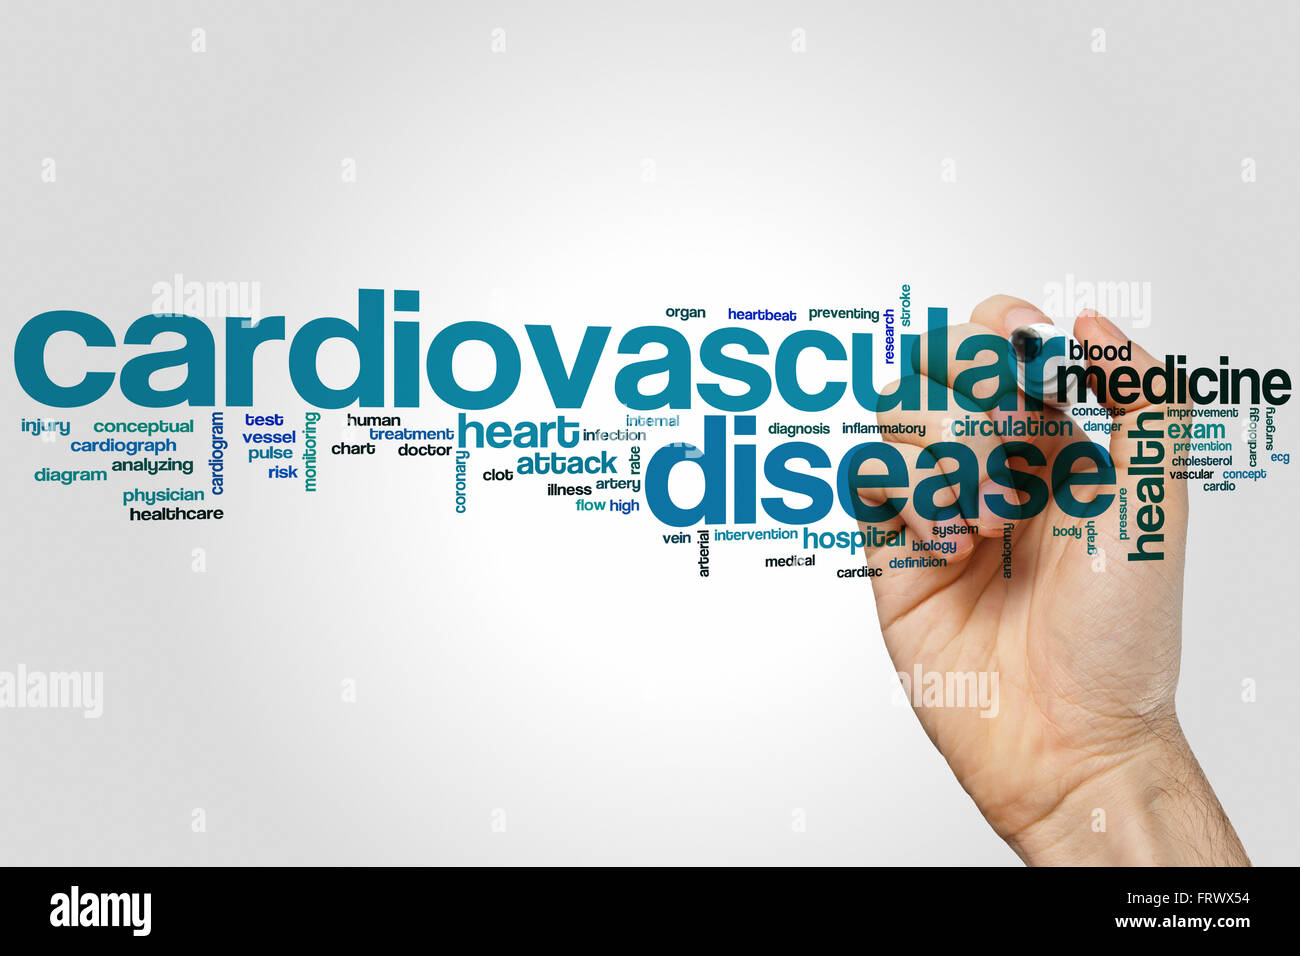 Cardiovascular disease word cloud concept Stock Photo